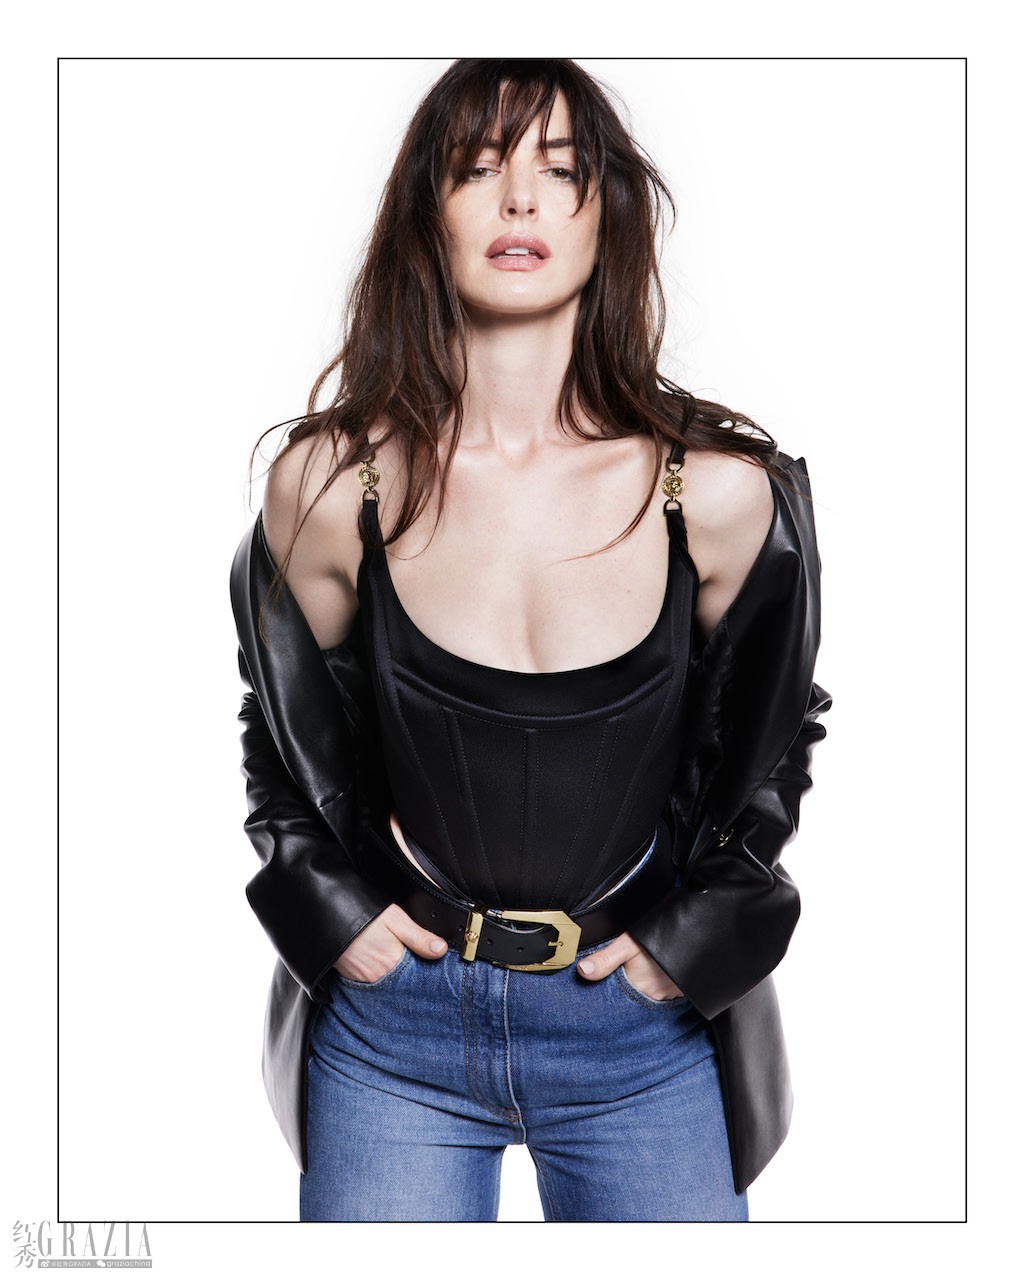 Versace Icons_Anne Hathaway Image 2.jpg